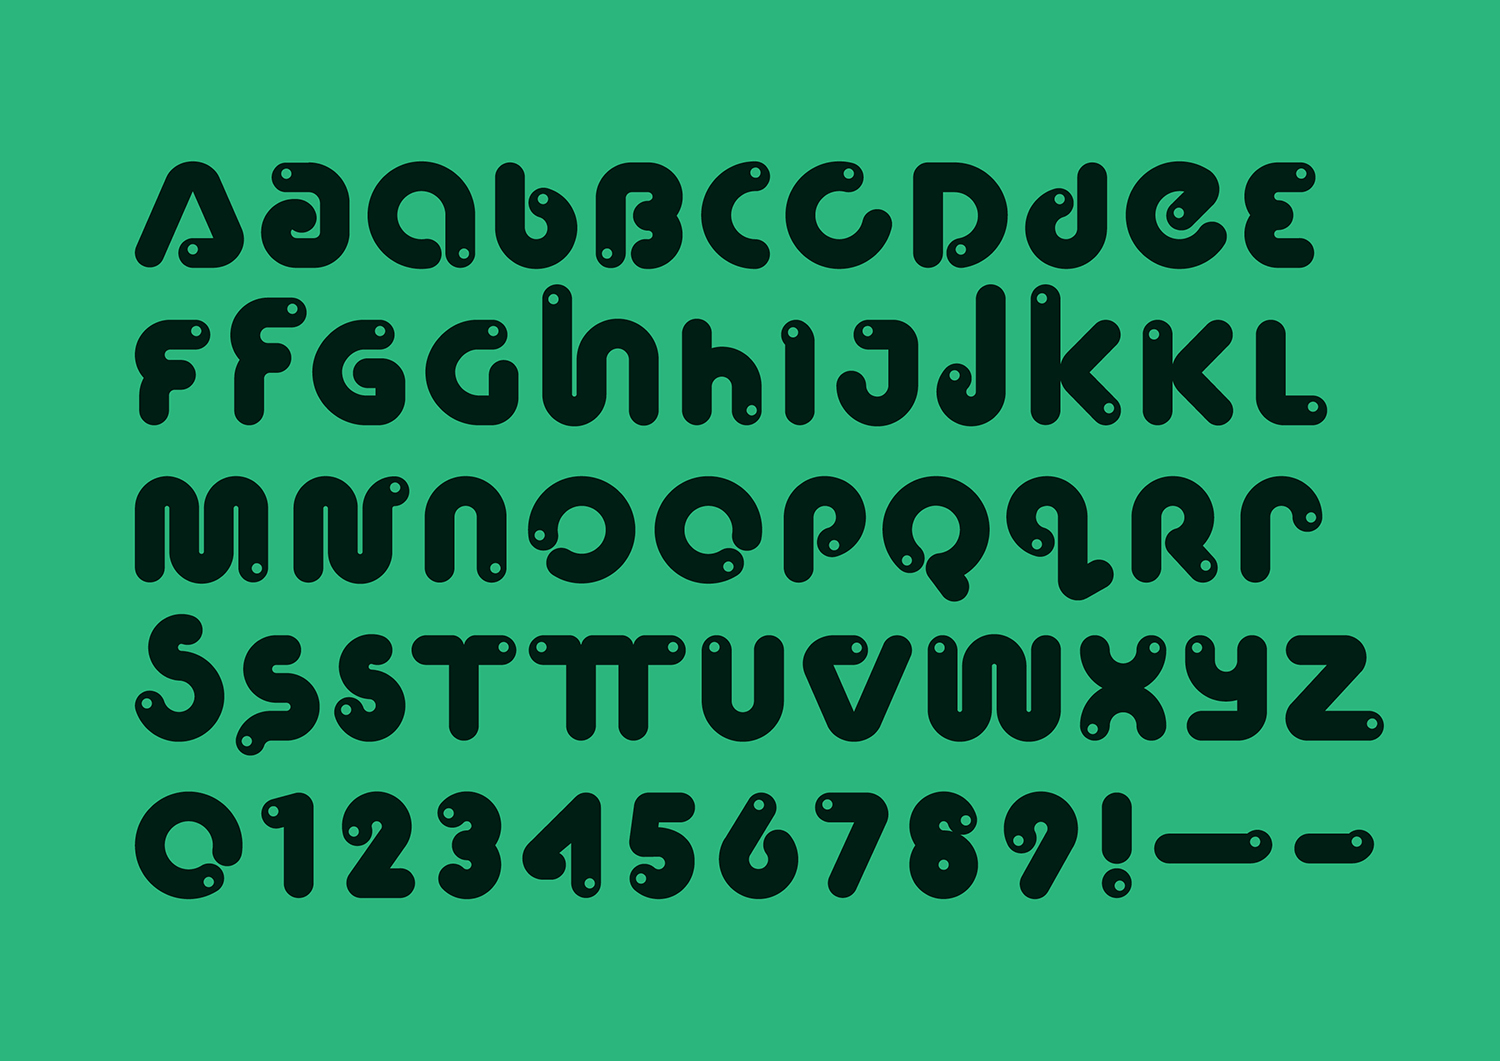 Custom Typeface Design – We Compost by Seachange, New Zealand